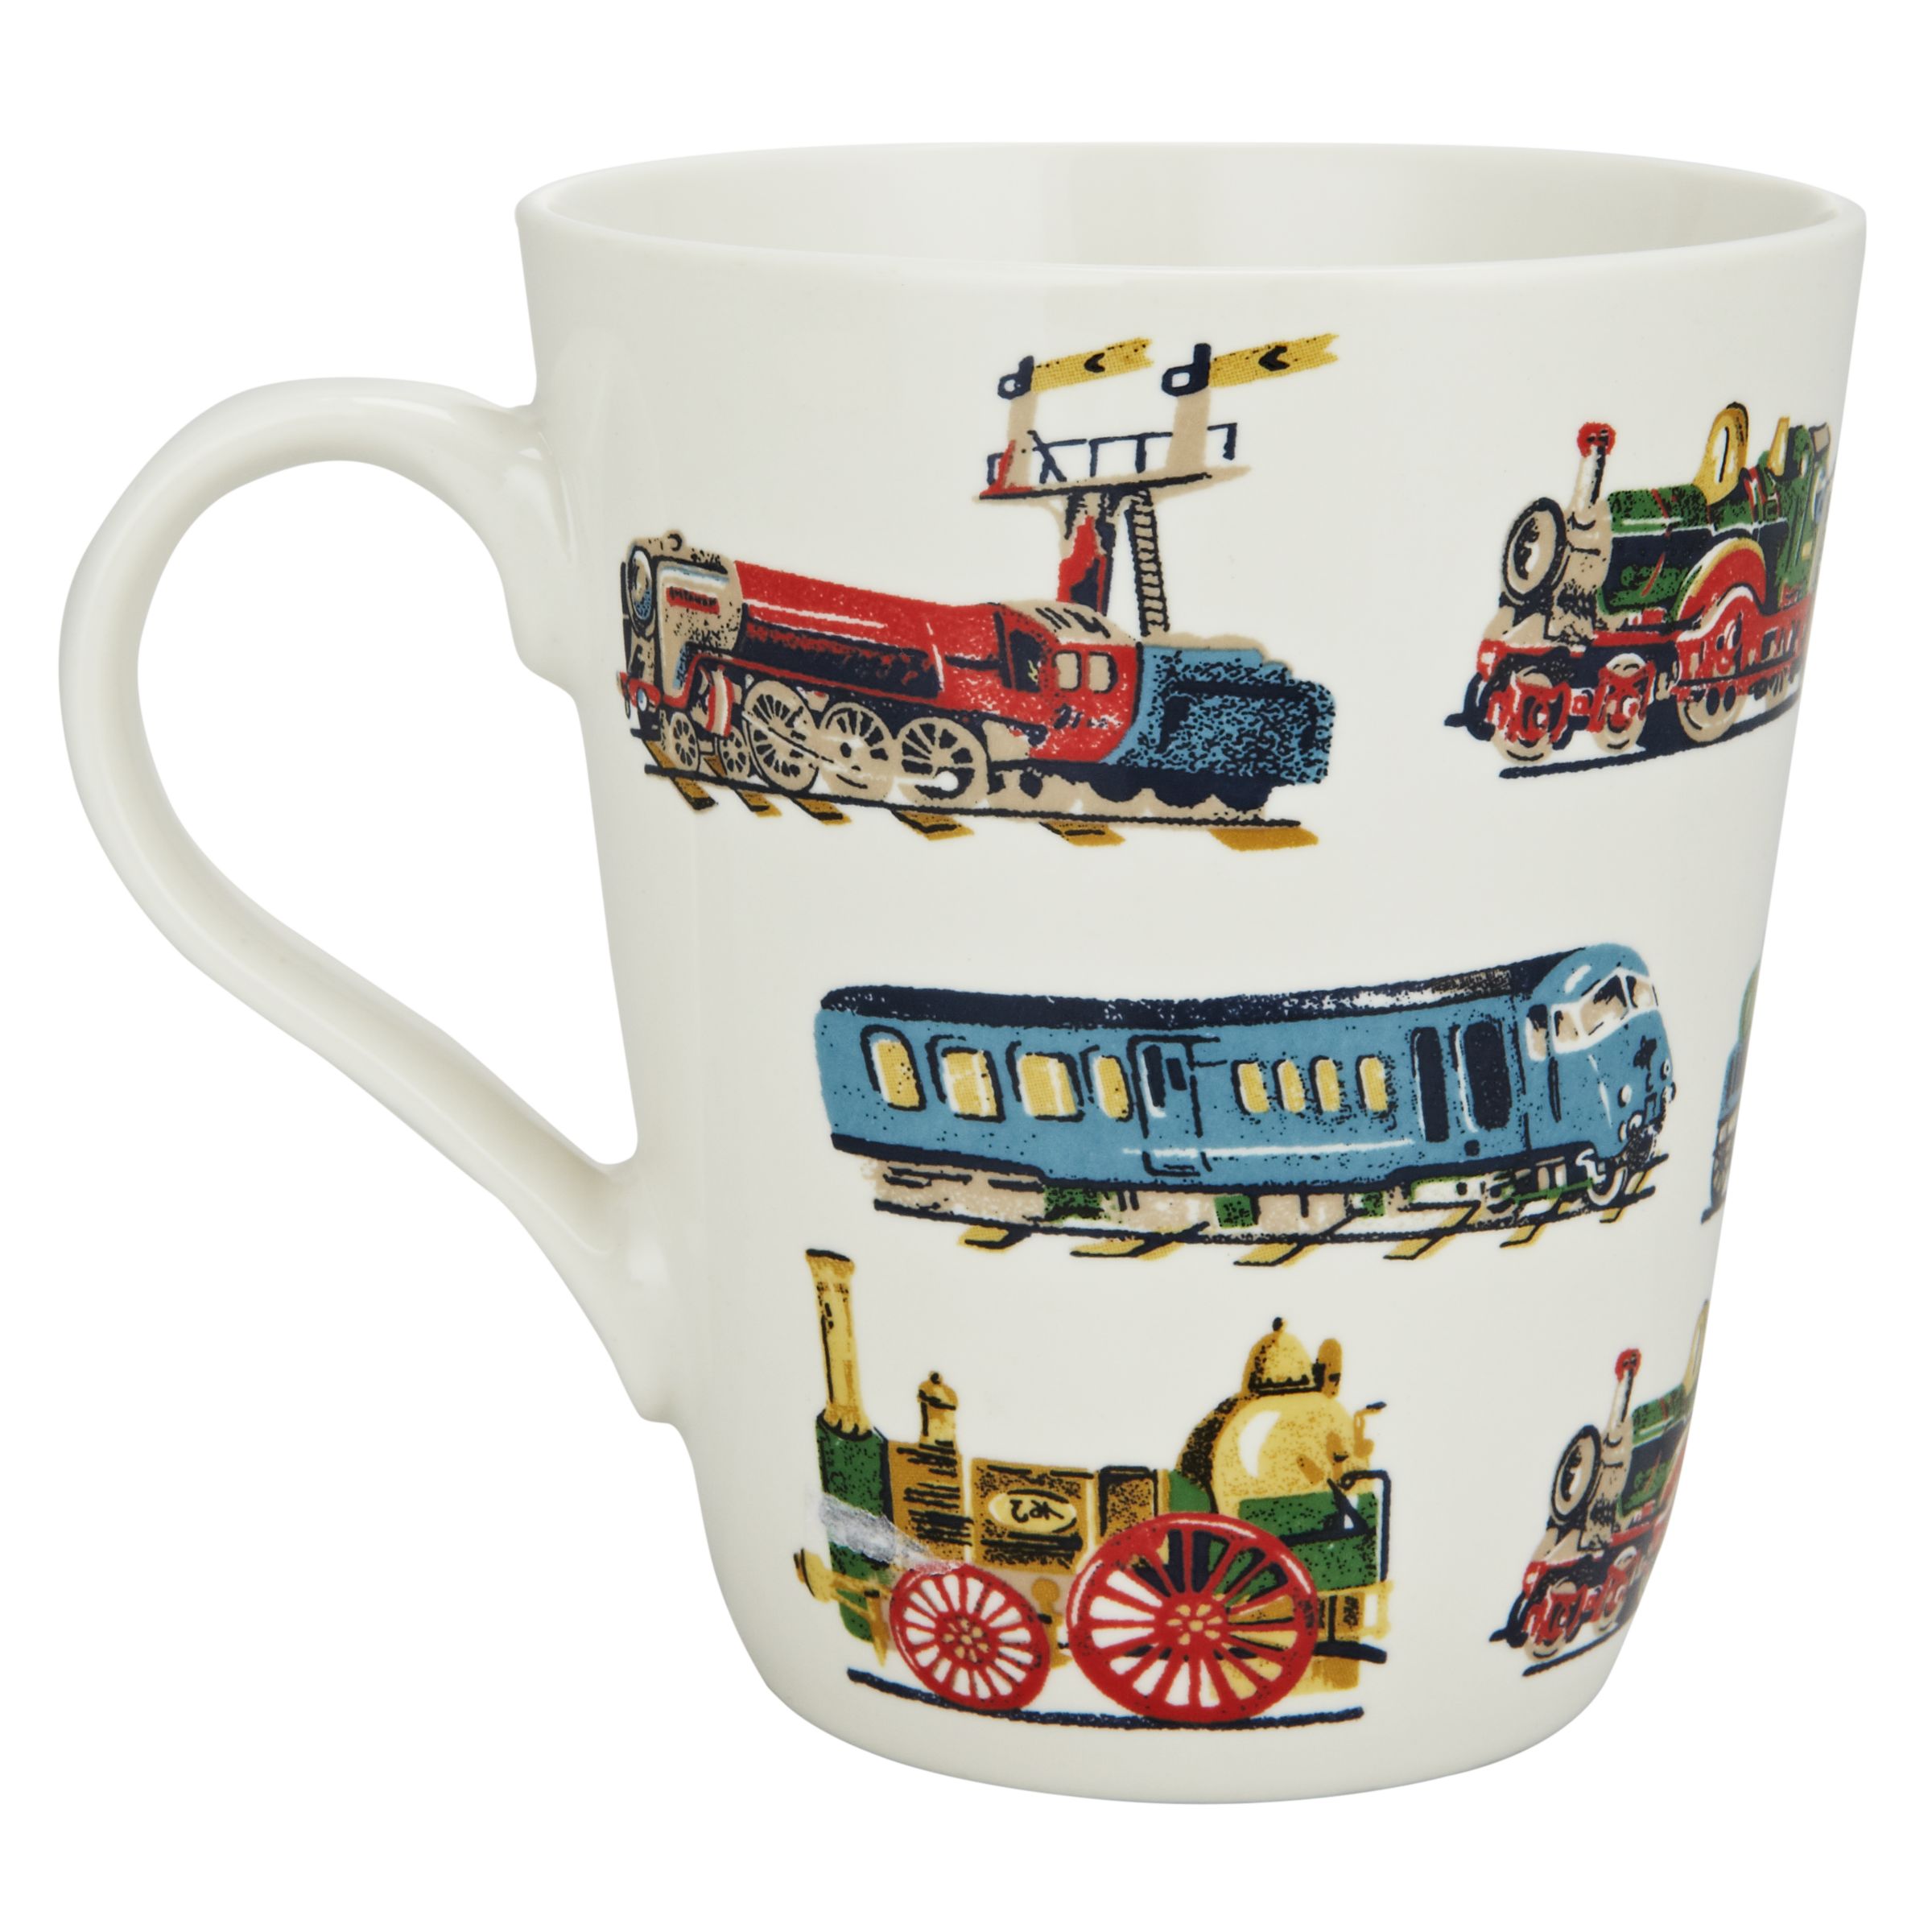 cath kidston train mug